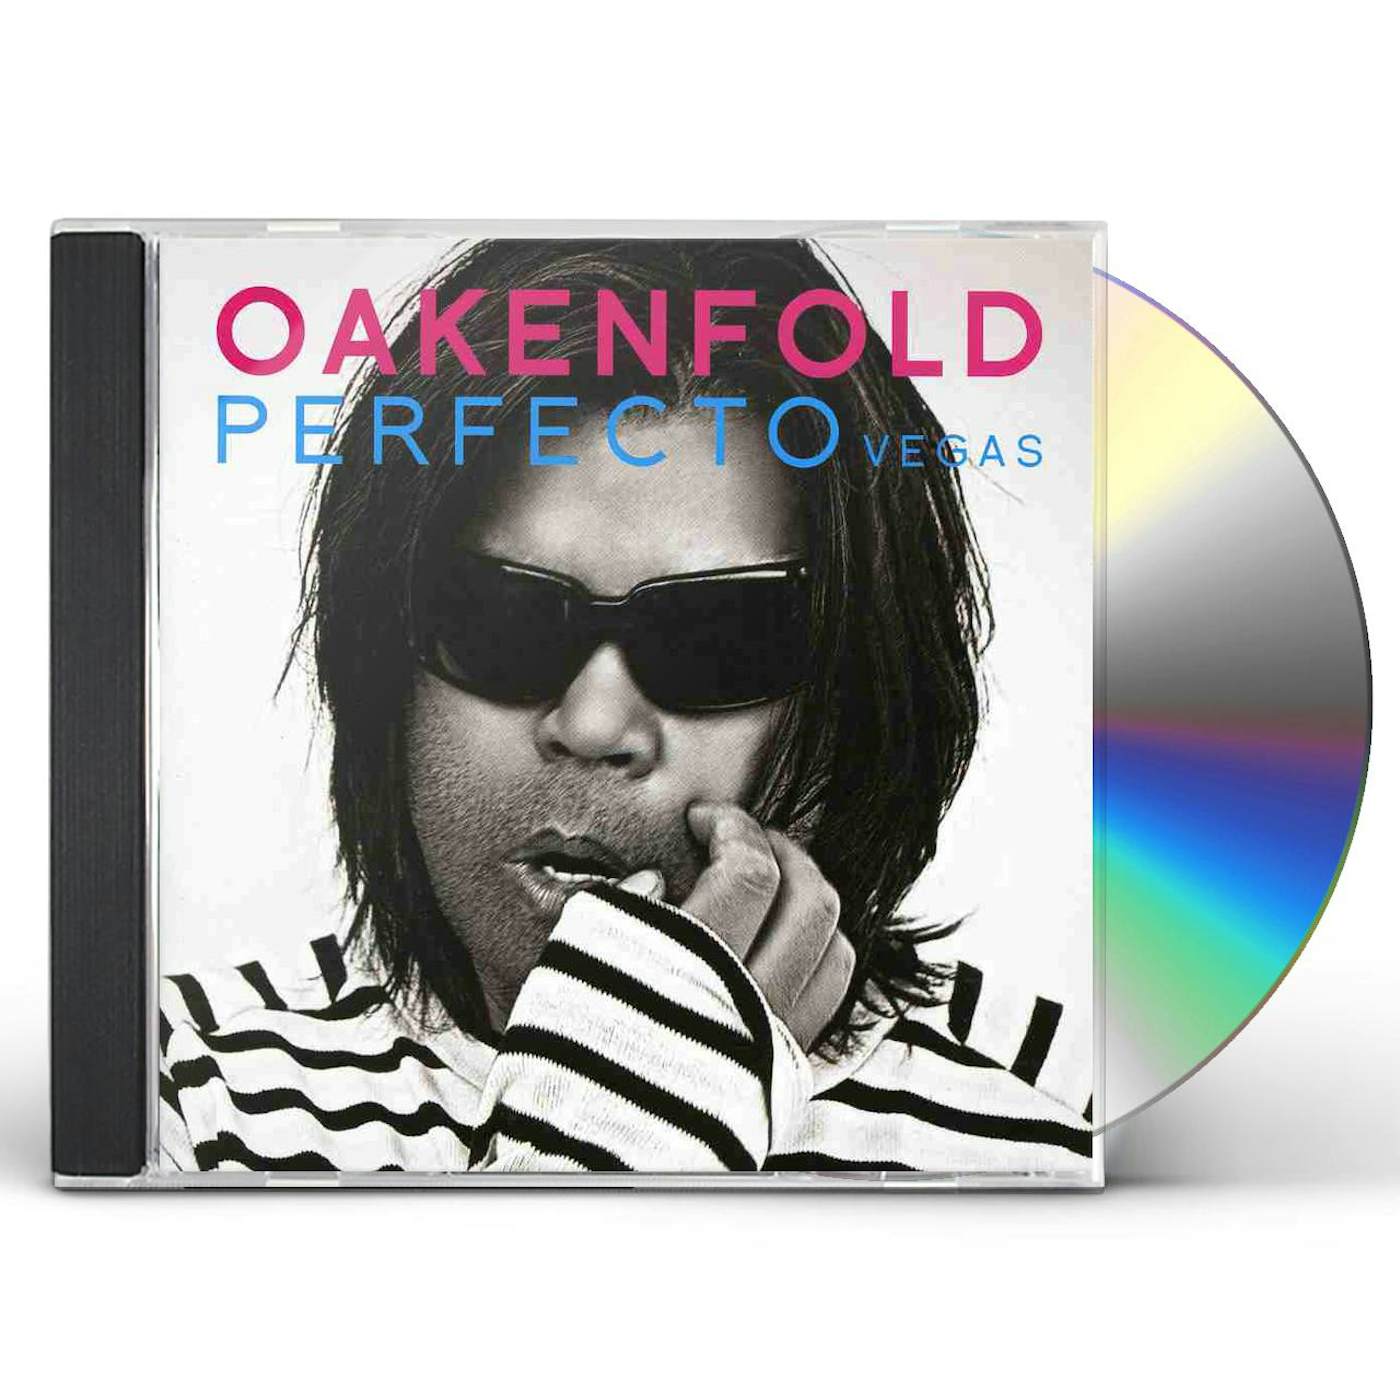 Paul Oakenfold PERFECTO VEGAS CD